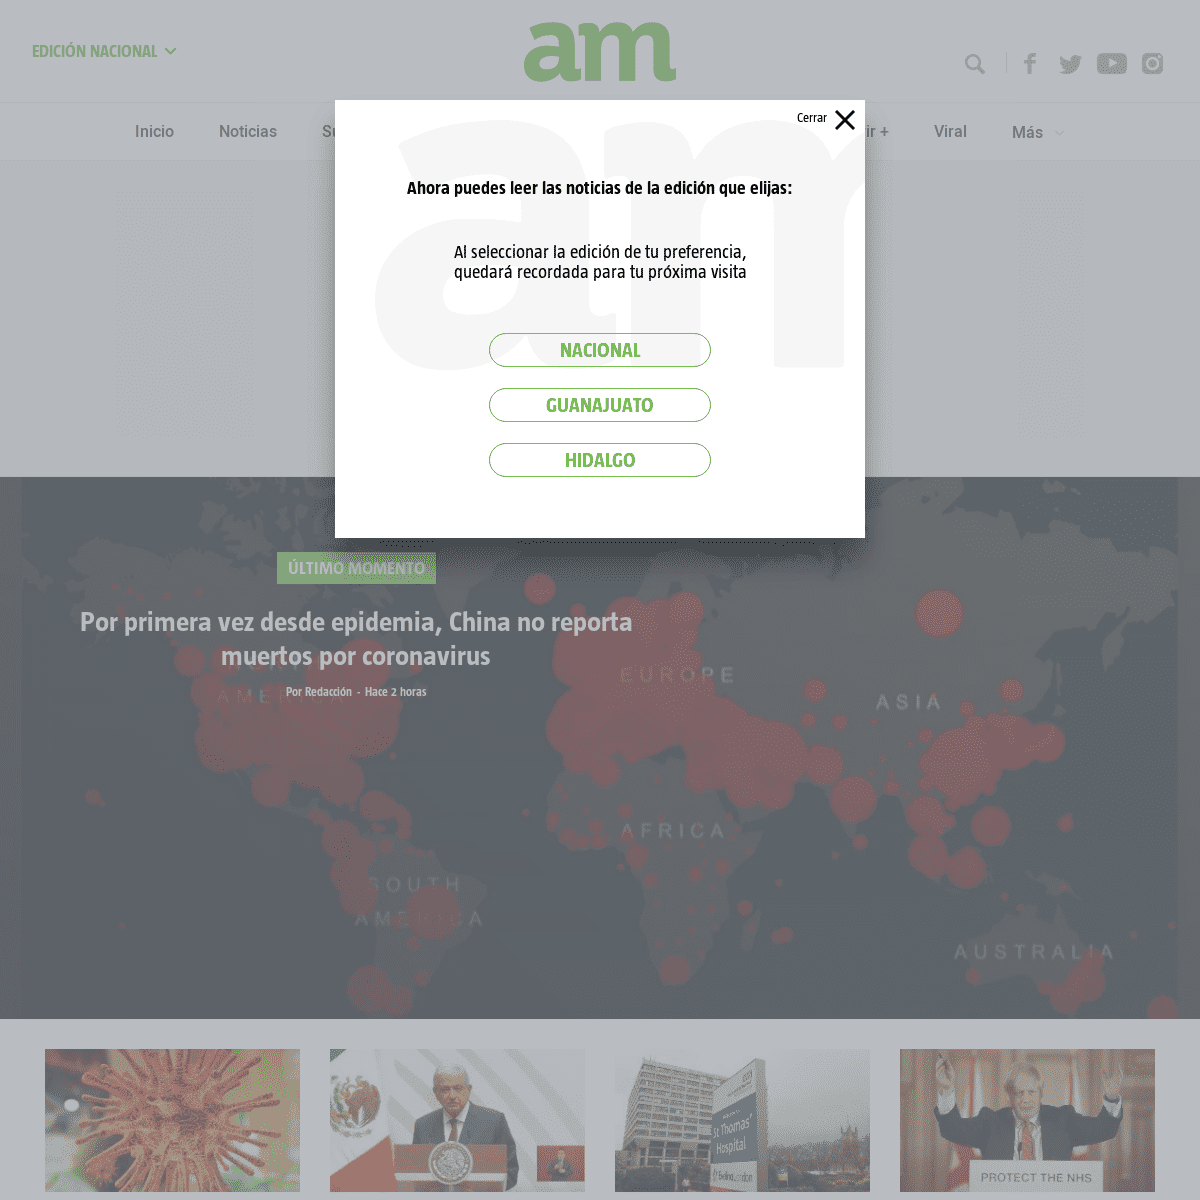 A complete backup of am.com.mx